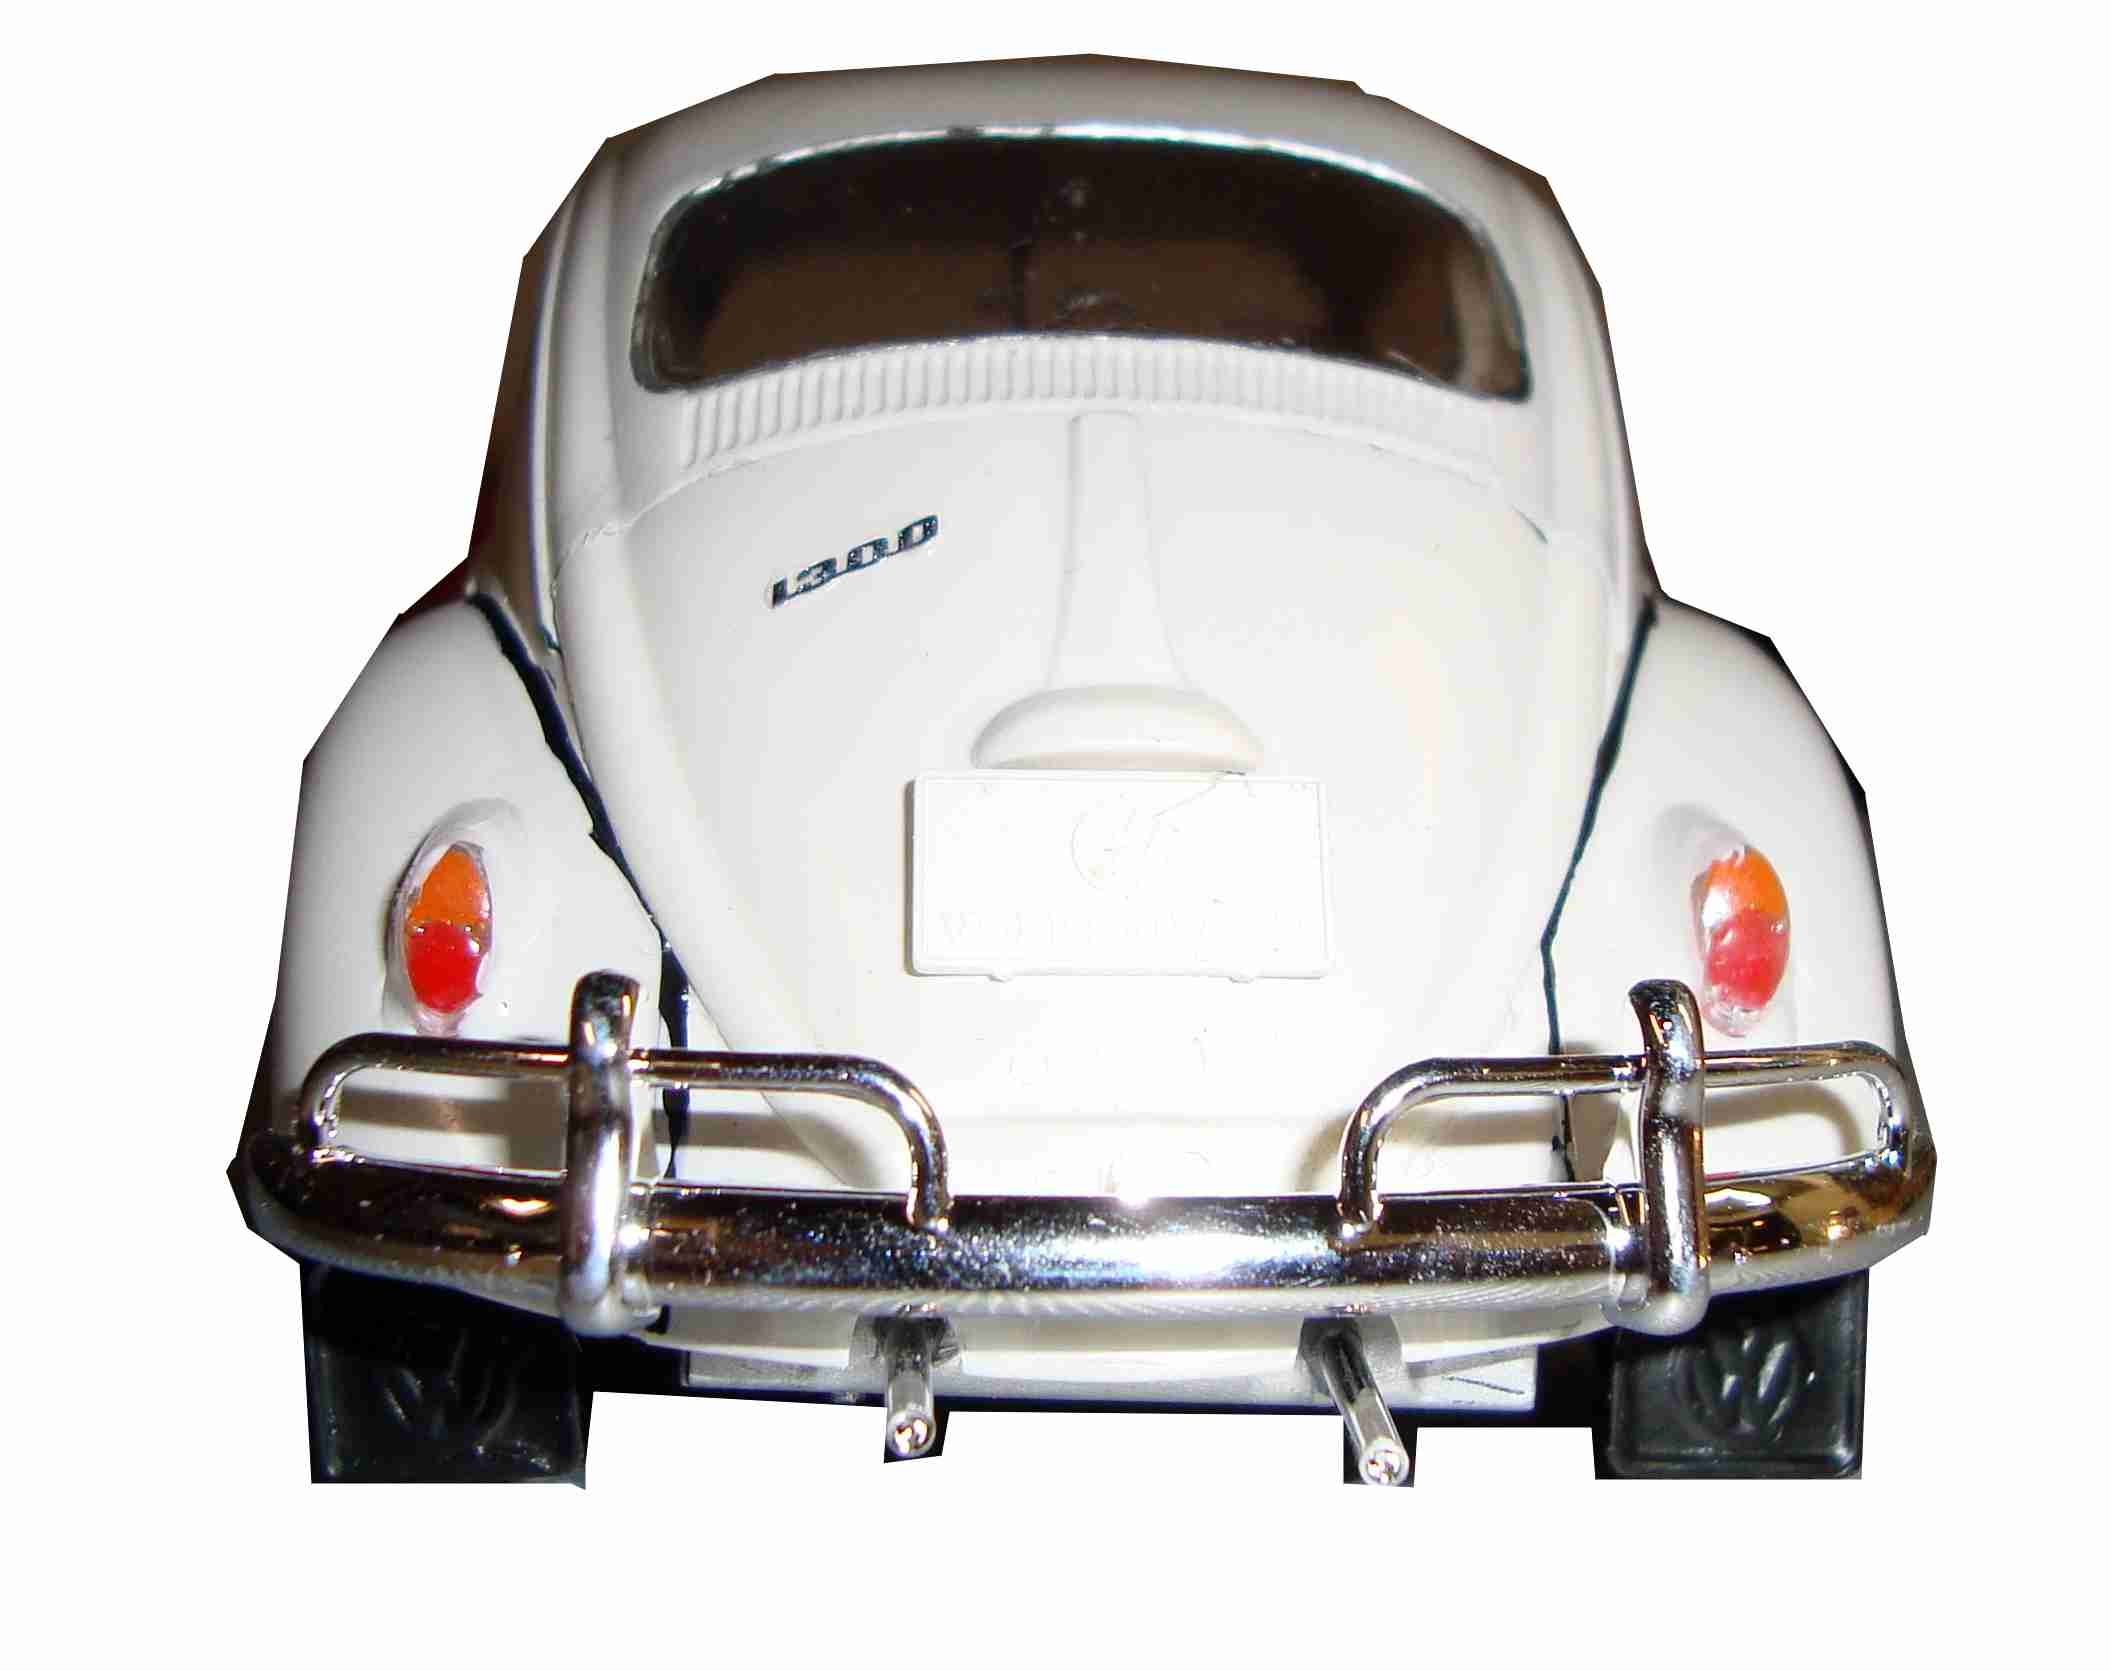 Harrys Garage und der 1958er HI-Jacker VW Käfer - Rechteckkäfer on Air